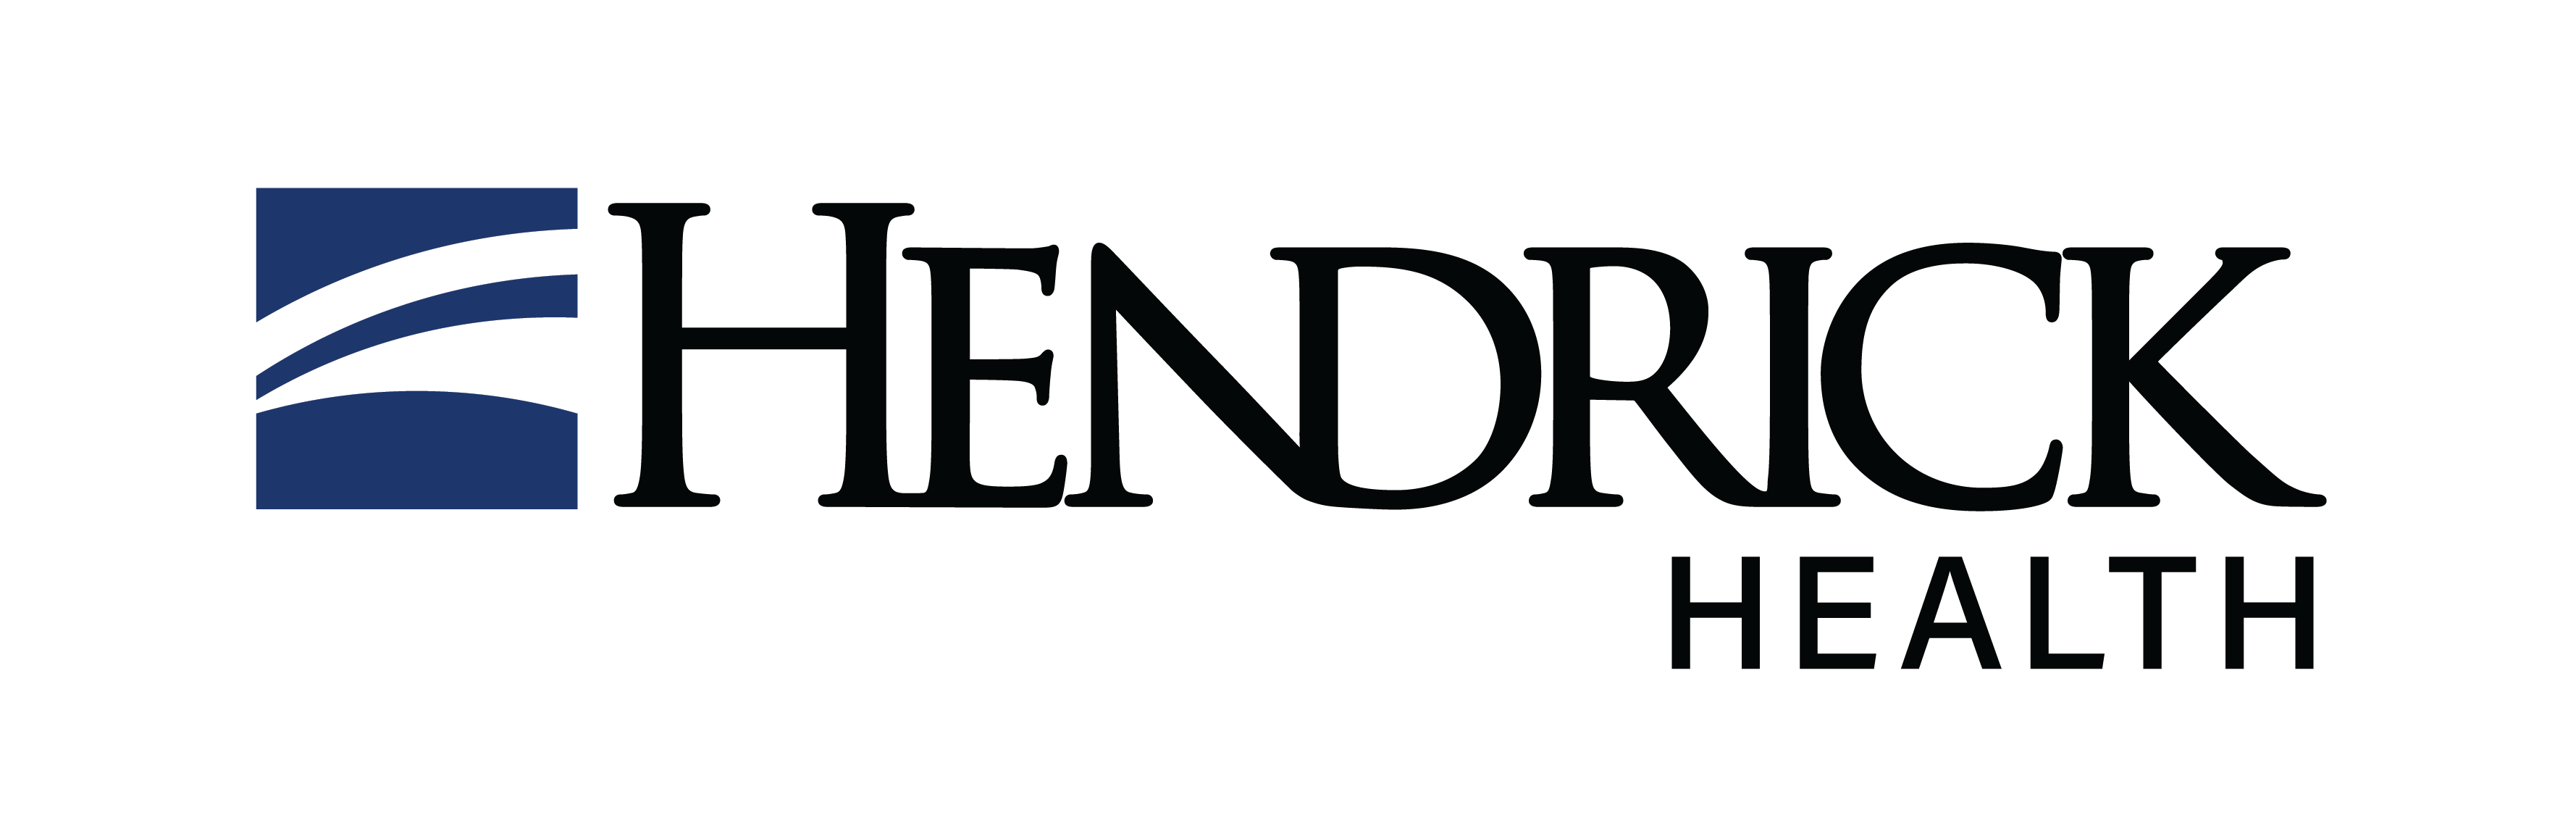 hendrick-health-logo-1660239821.png